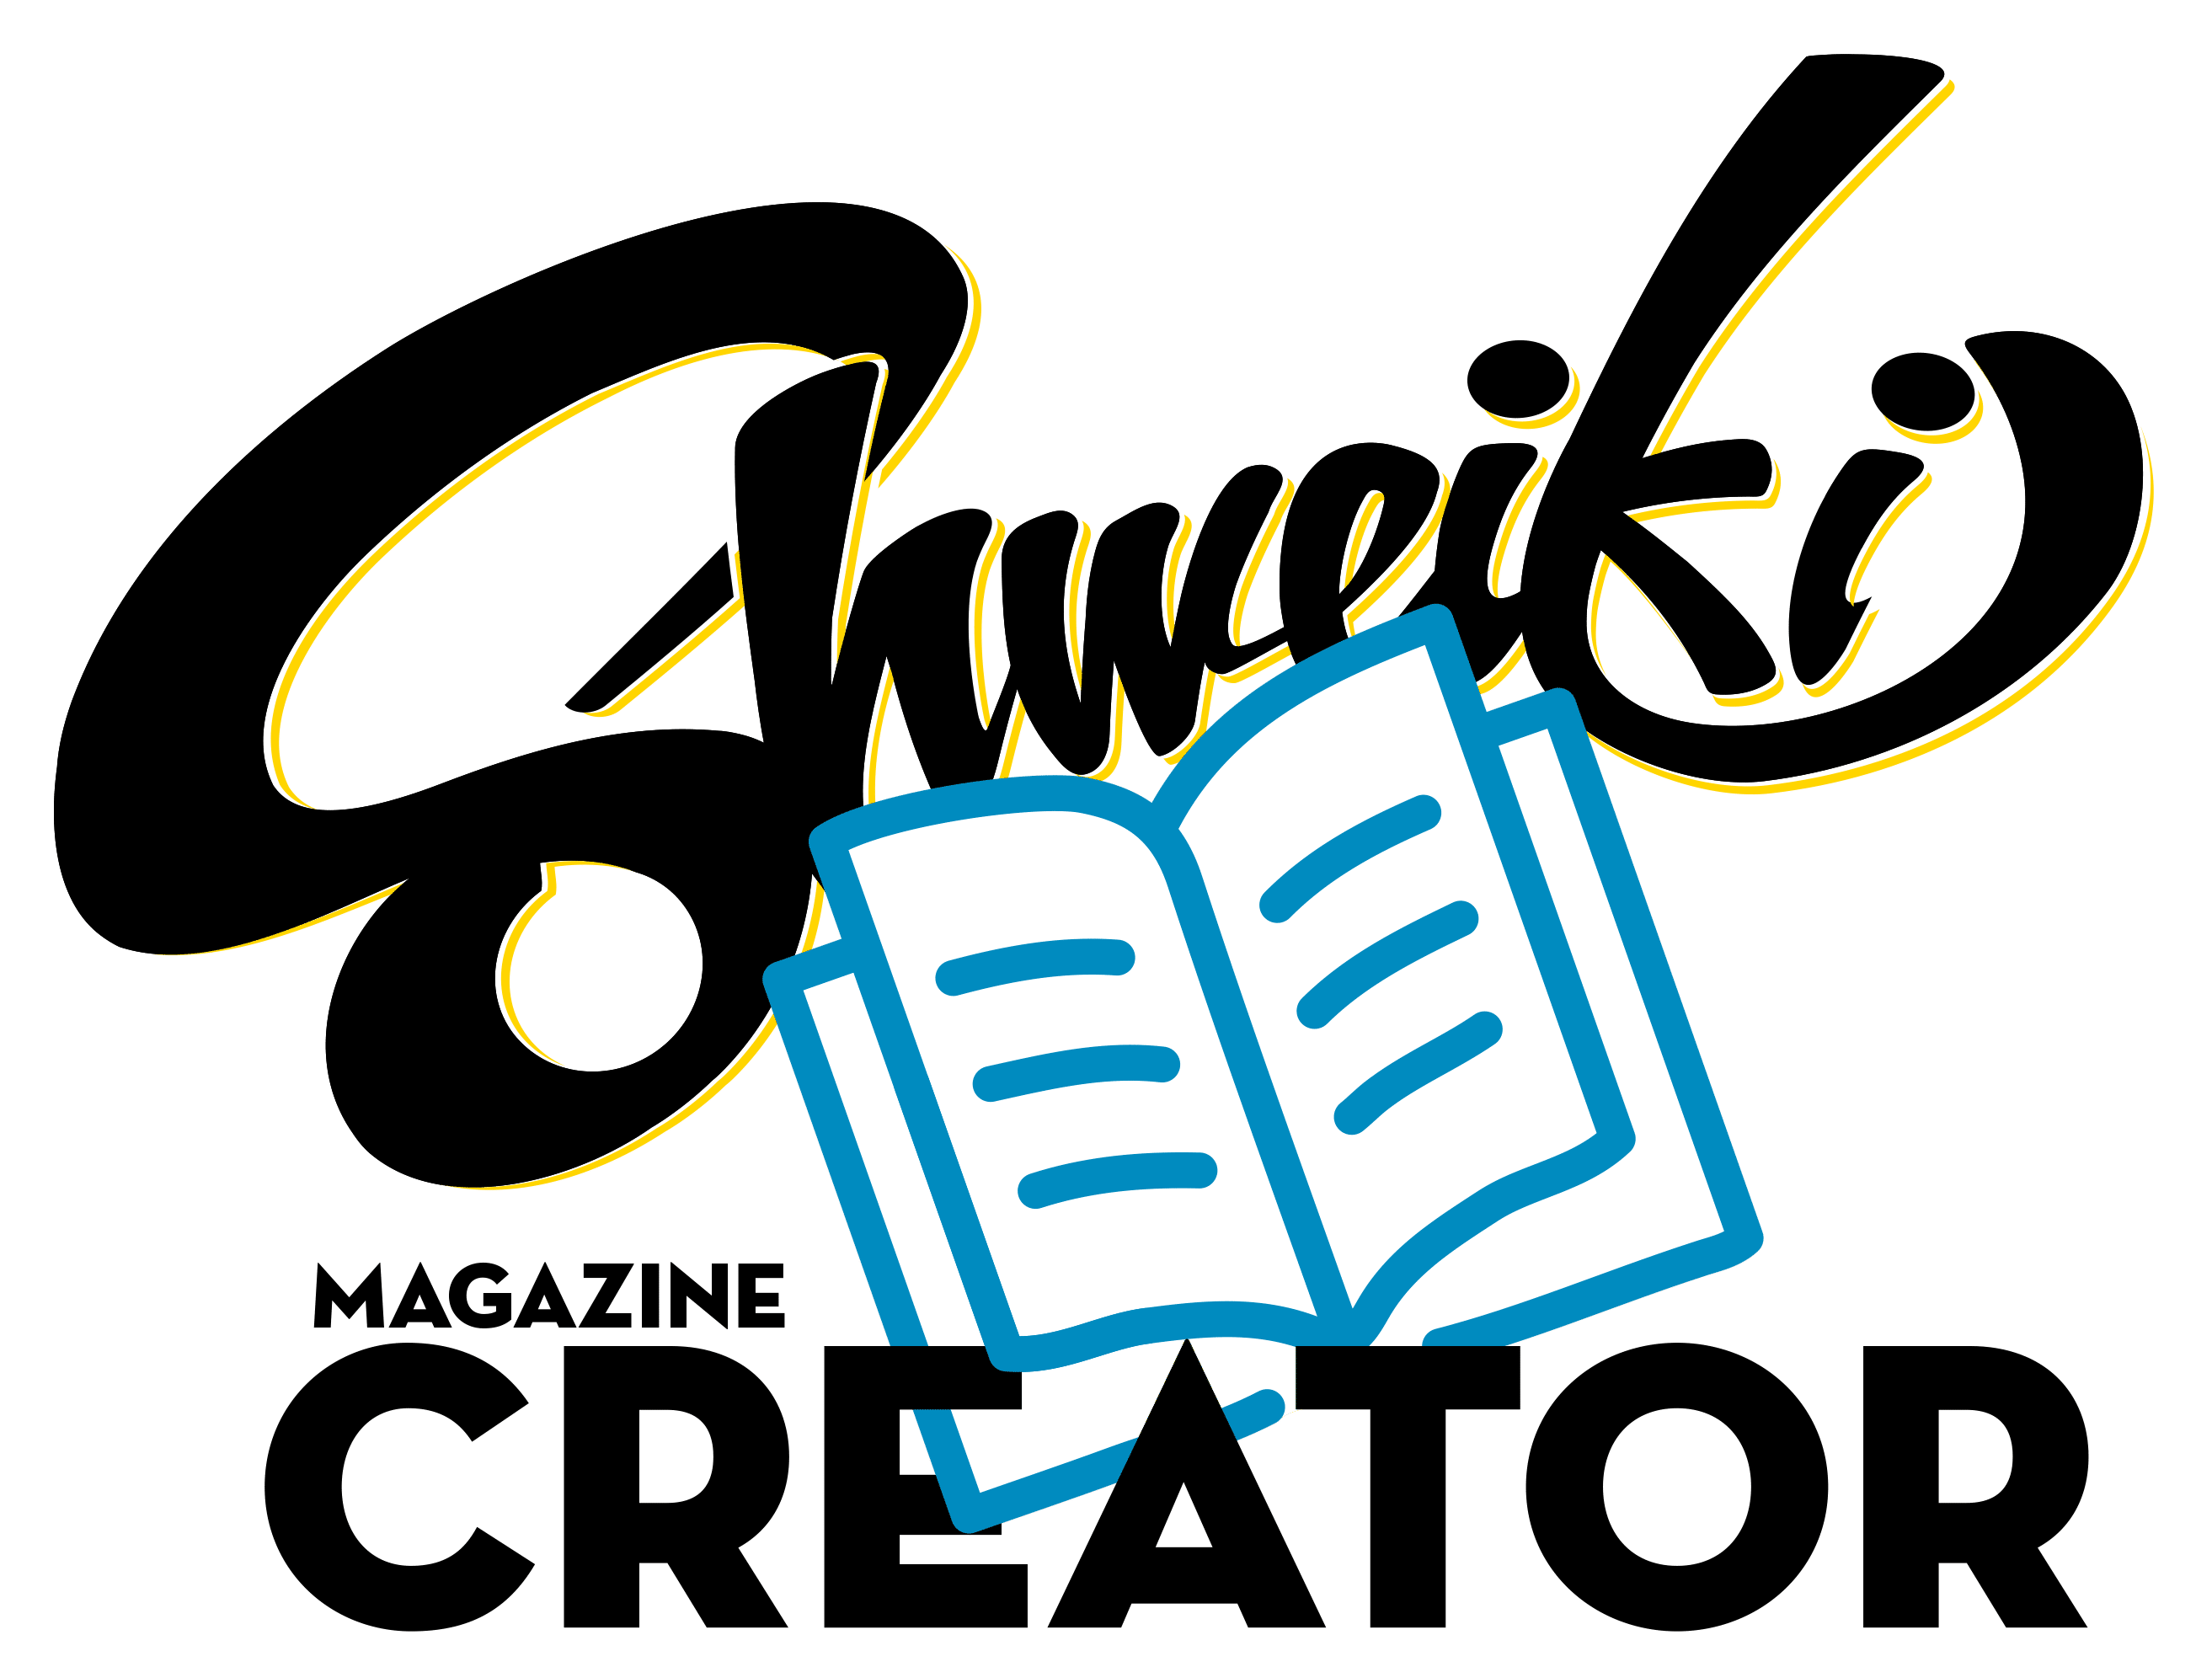 Shweiki Magazine Creator